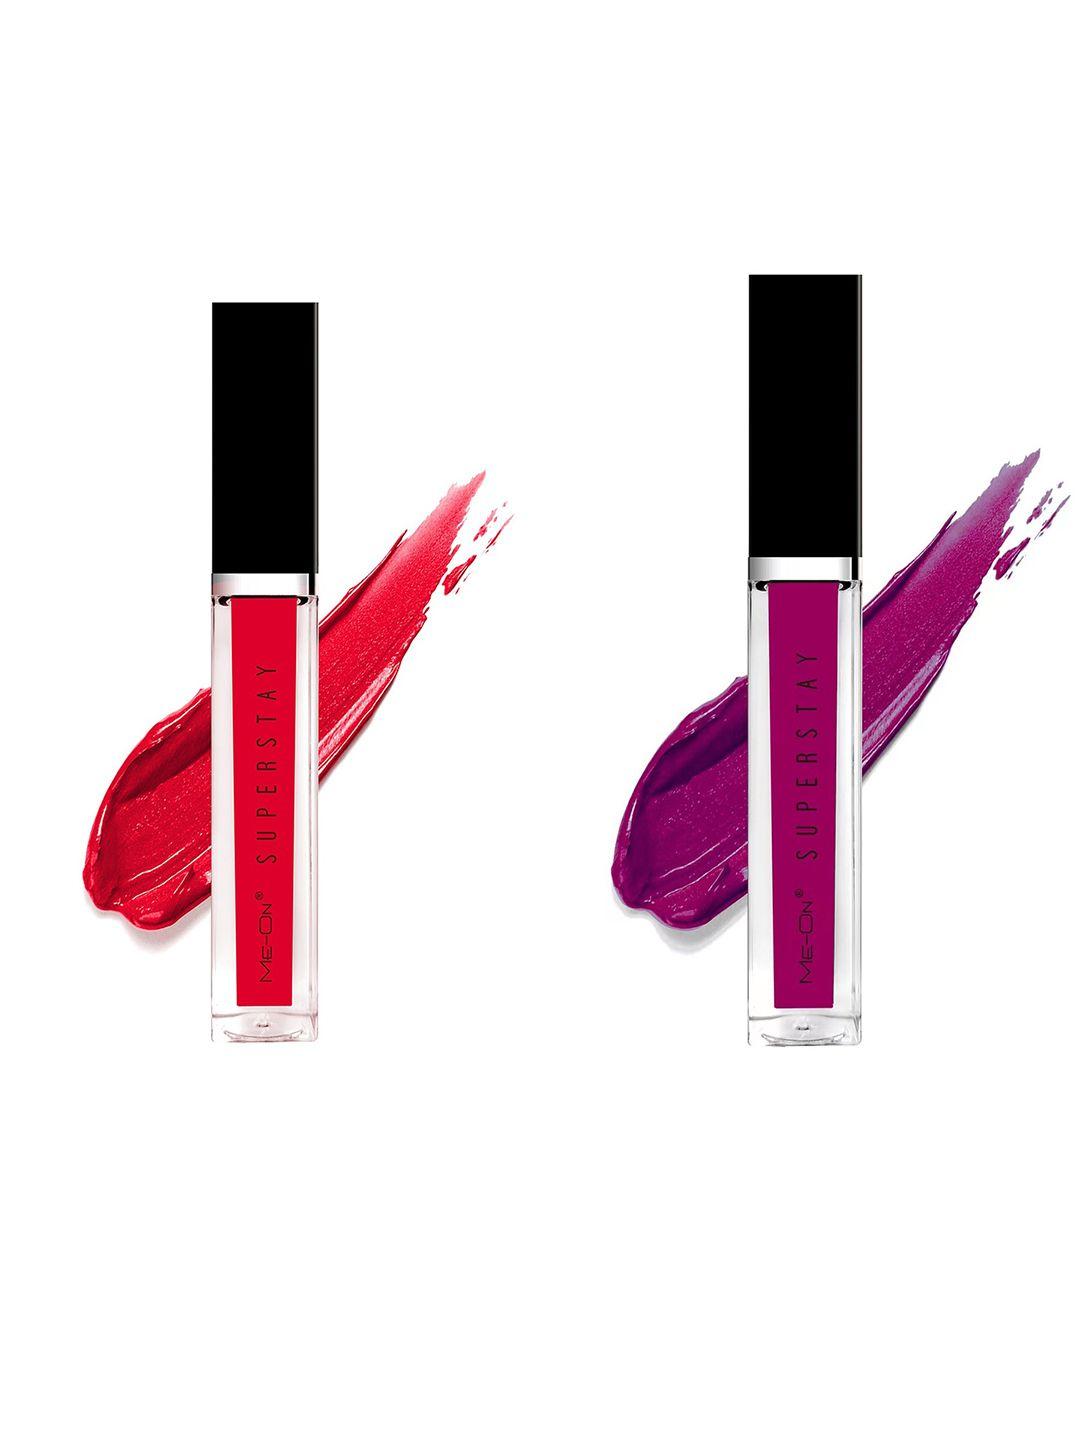 me-on set of 2 super stay lip gloss - seductive red 03 & purple affair 03